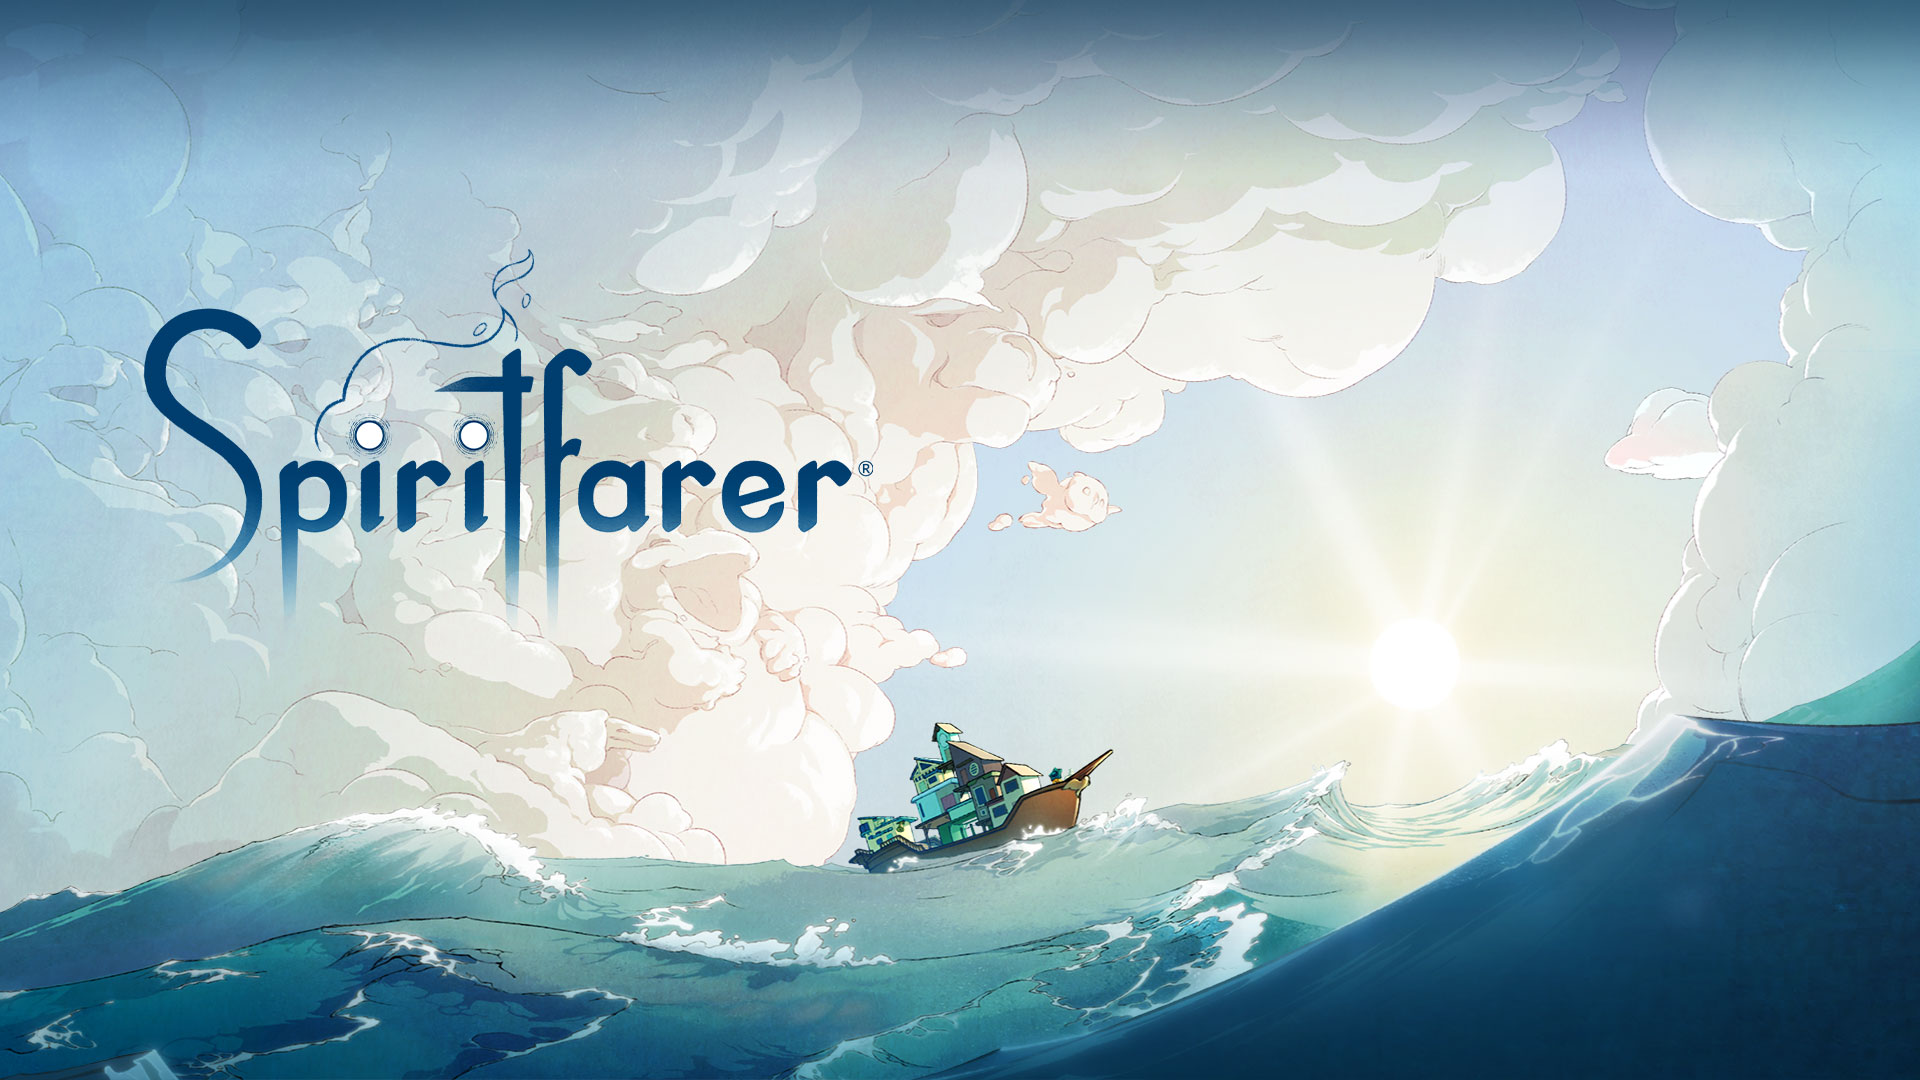 Spiritfarer 로고, 다양한 동물 모양의 구름이 떠 있는 물 위의 보트